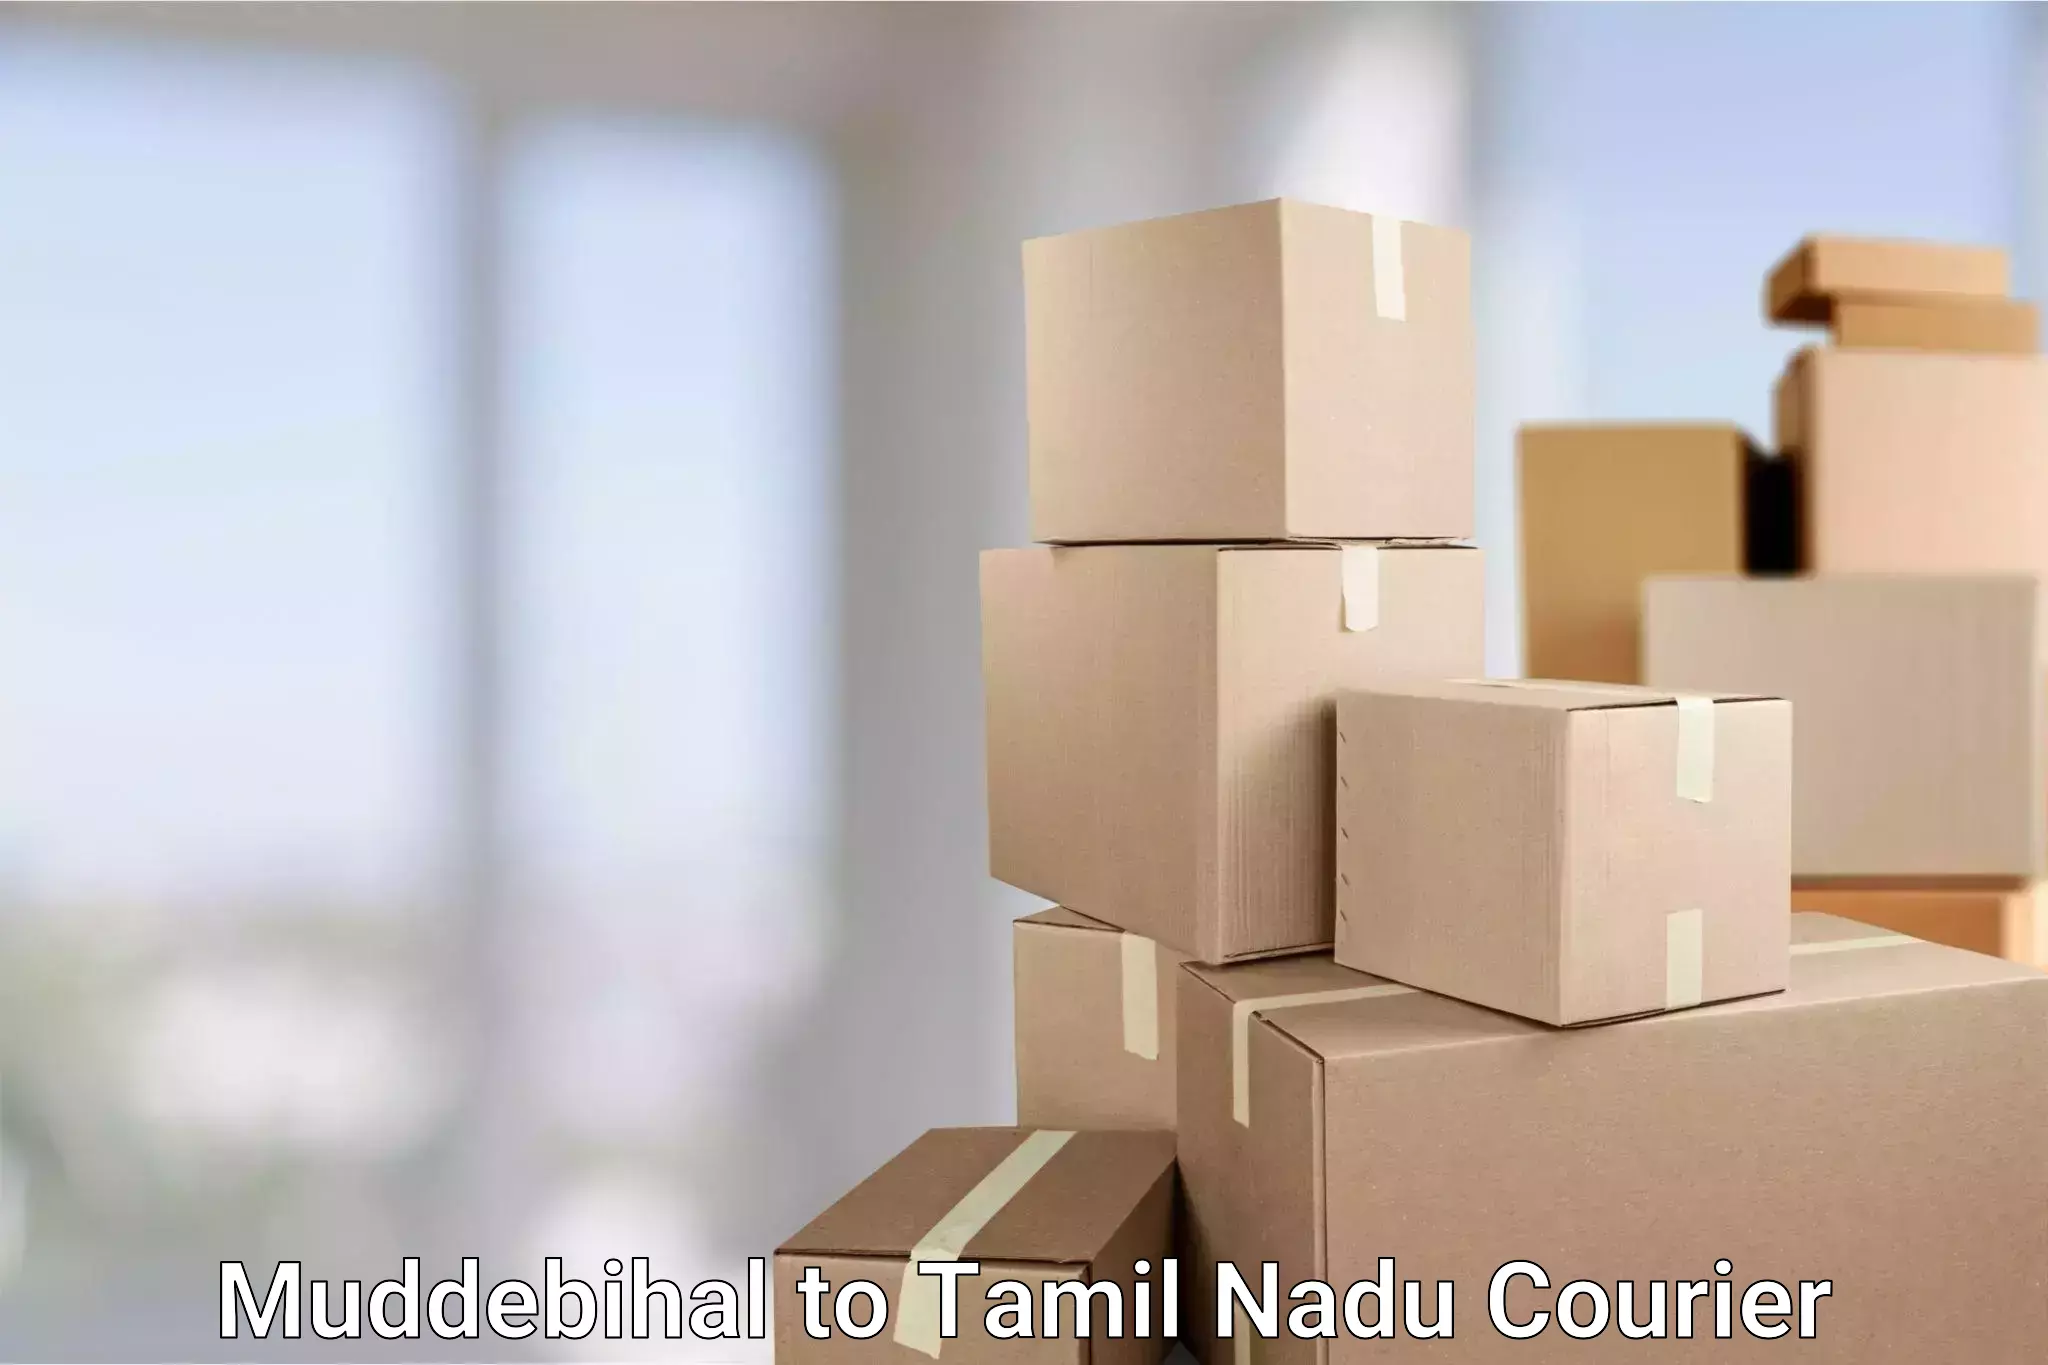 Supply chain delivery Muddebihal to Udumalaipettai